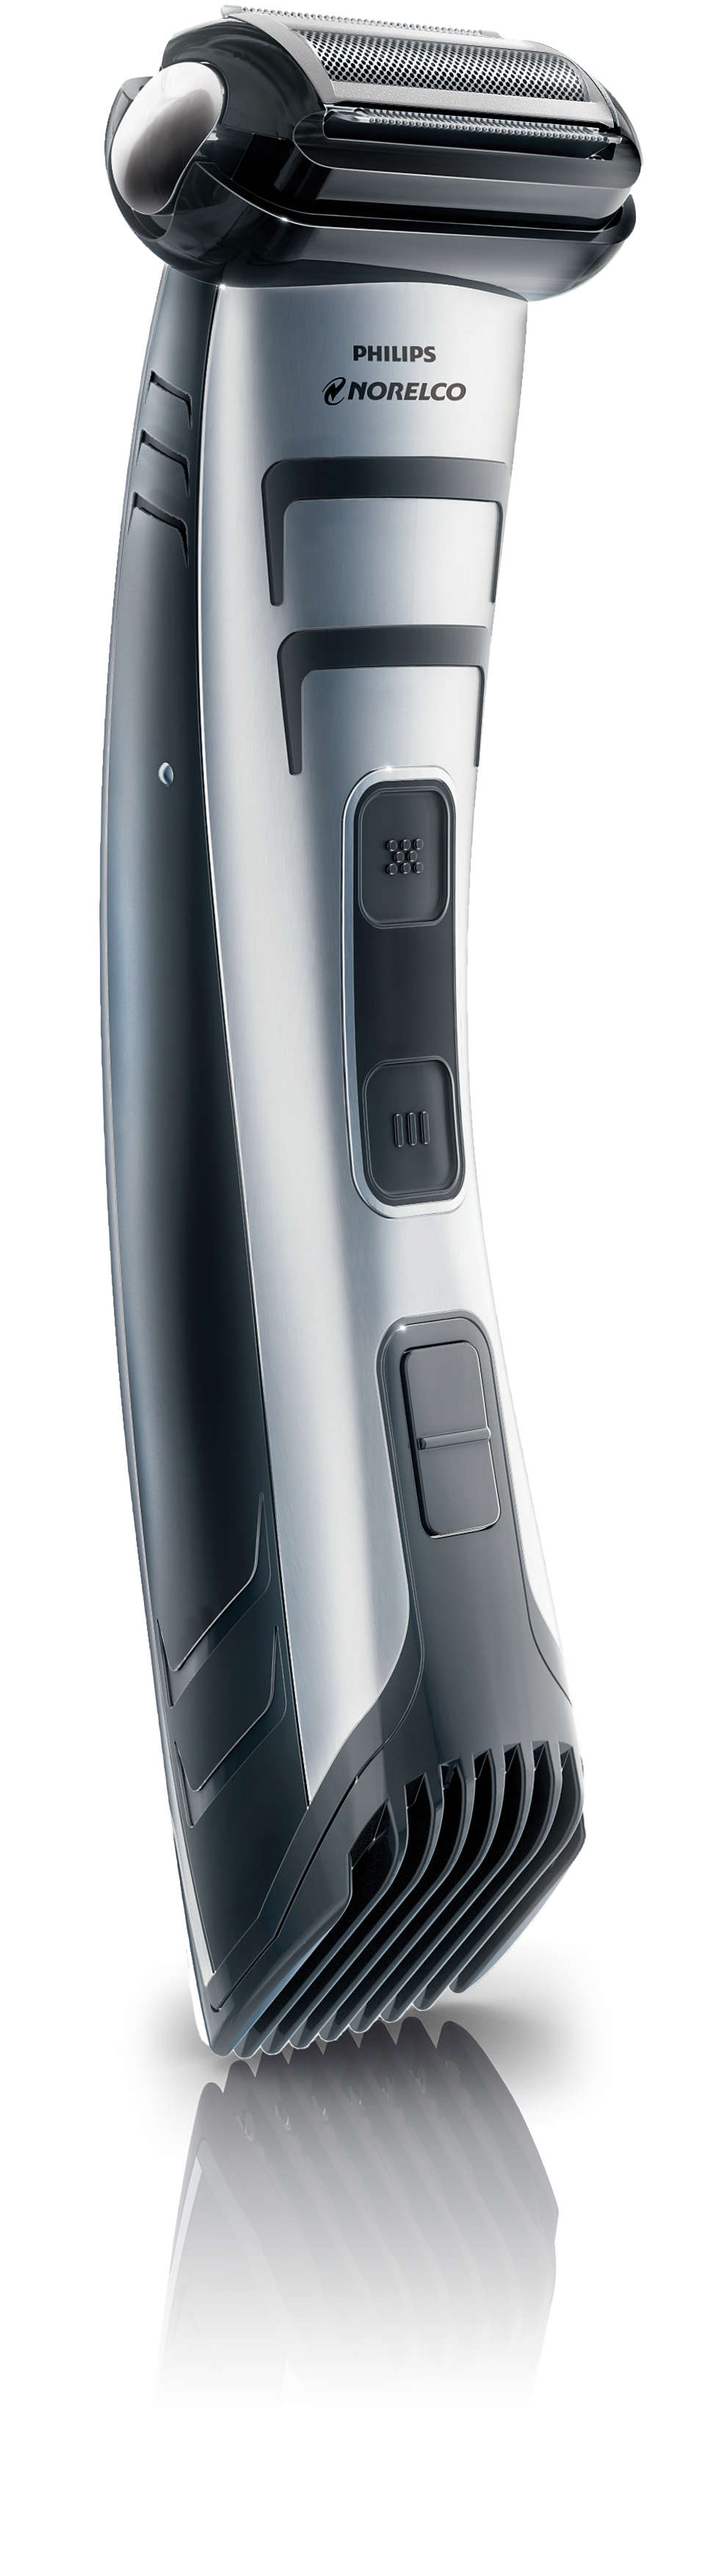 ødemark Skal indsats Bodygroom 7100 Showerproof body groomer, Series 7000 BG2040/34 | Norelco